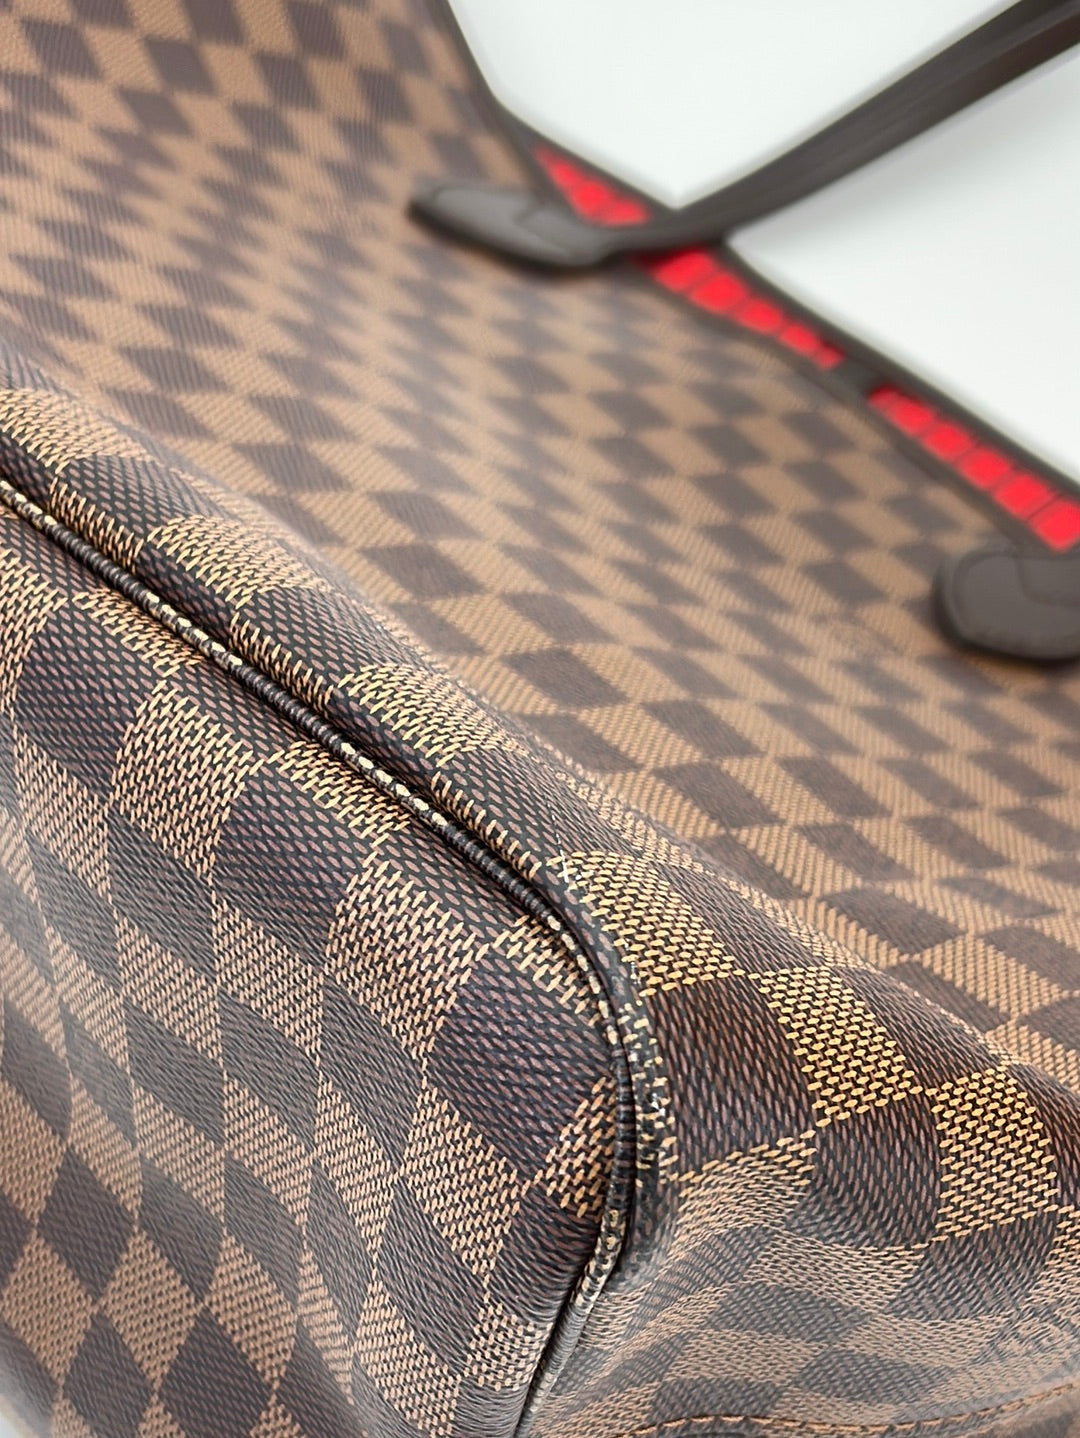 PRELOVED Louis Vuitton Damier Ebene Neverfull GM Tote Bag - Red Interior SD3280 020524